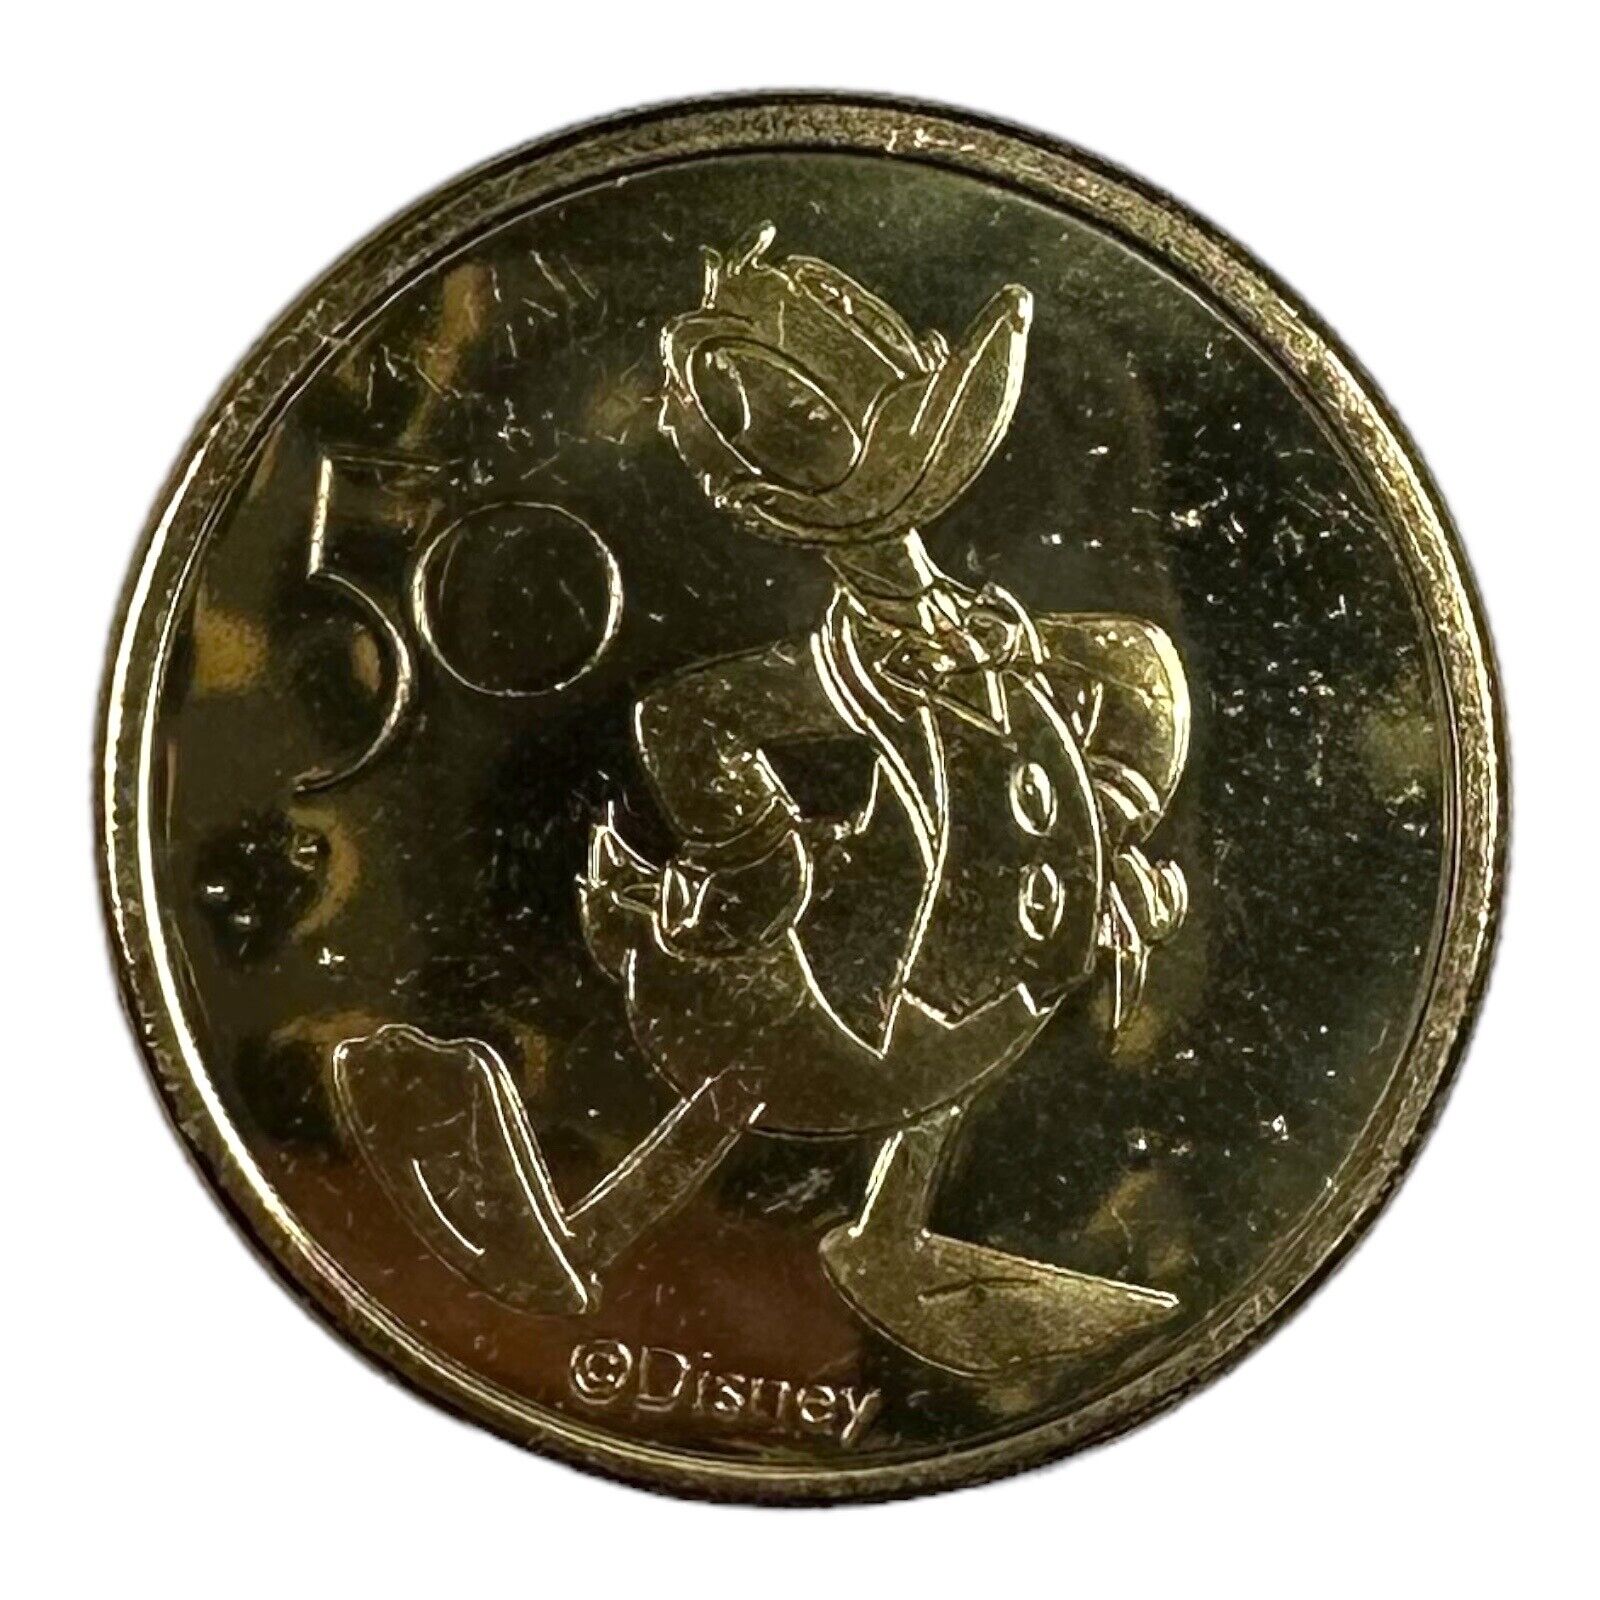 2021 Walt Disney World 50th Anniversary Metal Medallion Coin - Donald Duck